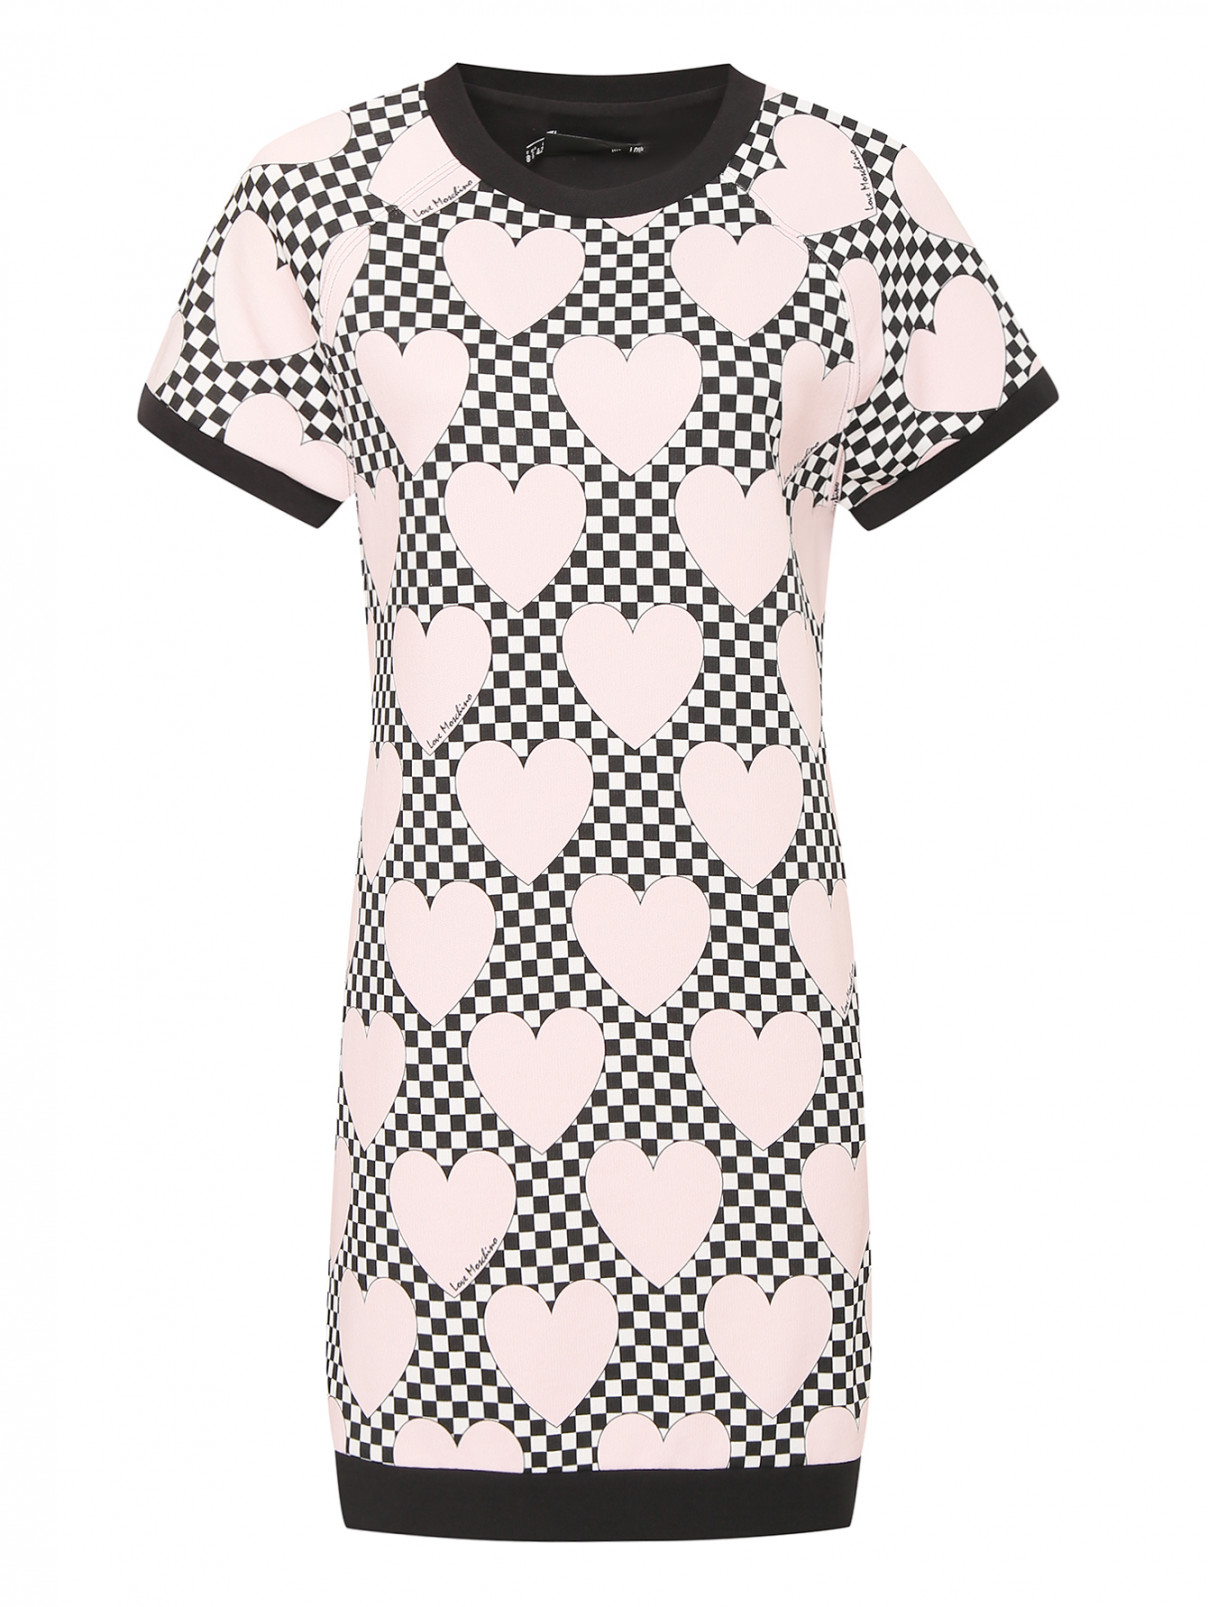 Платье из трикотажа с узором Love Moschino  –  Общий вид  – Цвет:  Узор